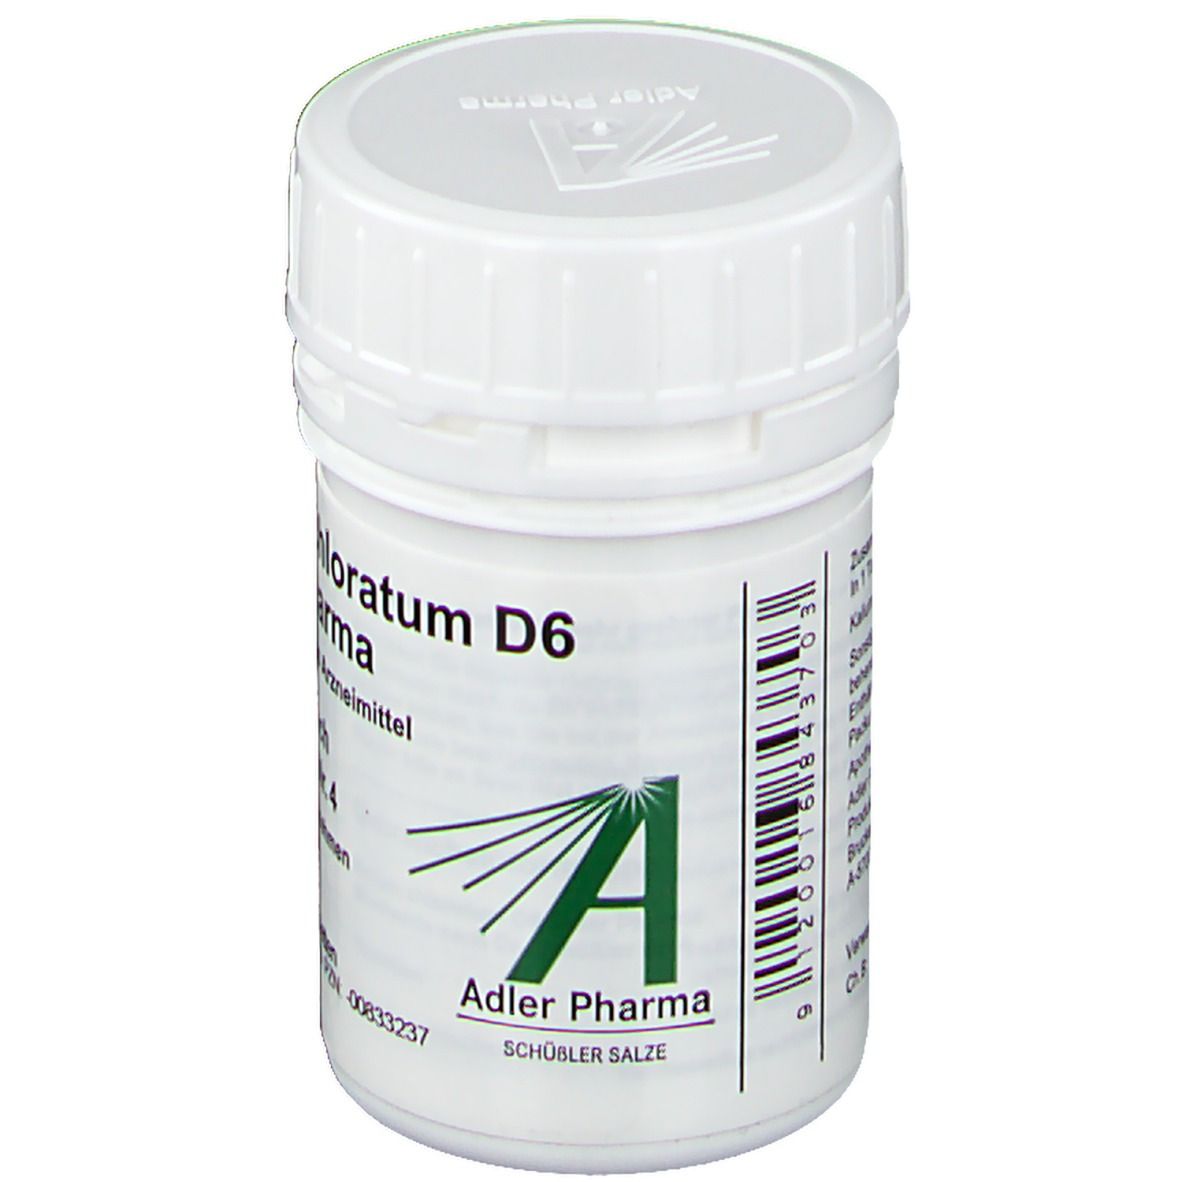 Biochemie nach Dr. Schüßler Nr. 4 Kalium chloratum D6